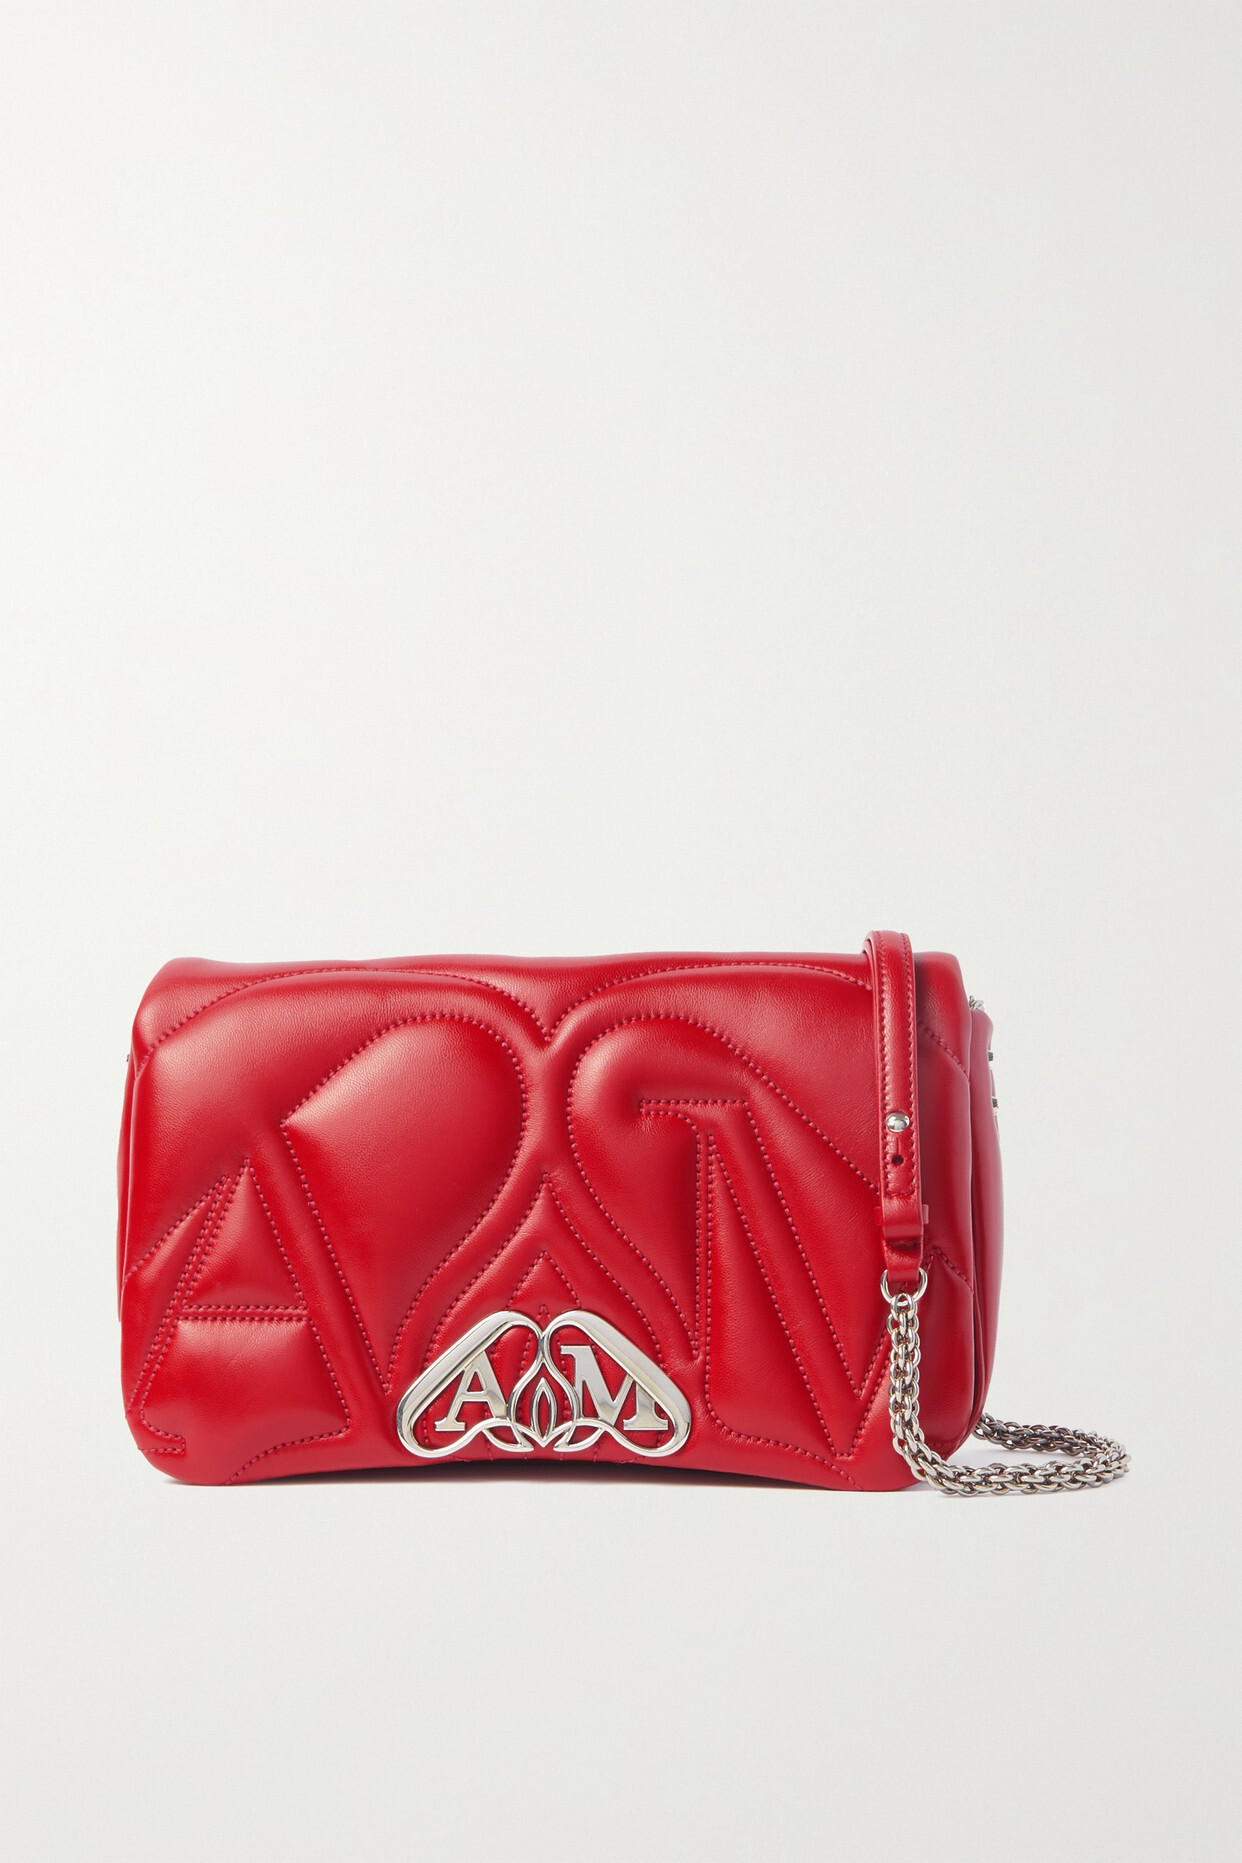 Alexander McQueen - Exploded Seal Embellished Quilted Leather Shoulder Bag - Red